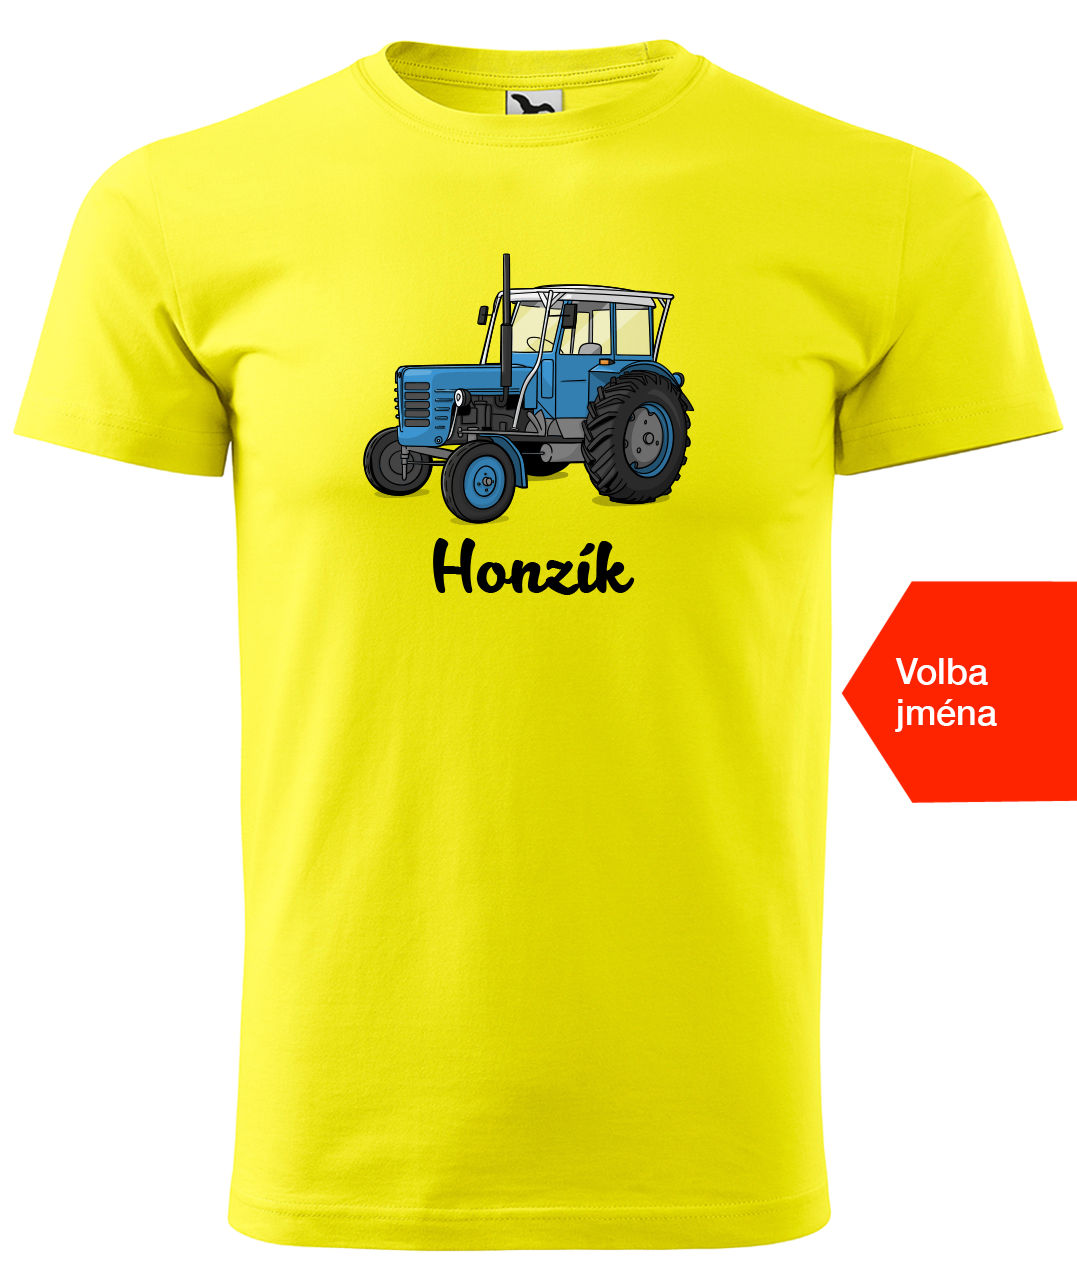 Dětské tričko s traktorem a jménem - Starý traktor Velikost: 4 roky / 110 cm, Barva: Žlutá (04)